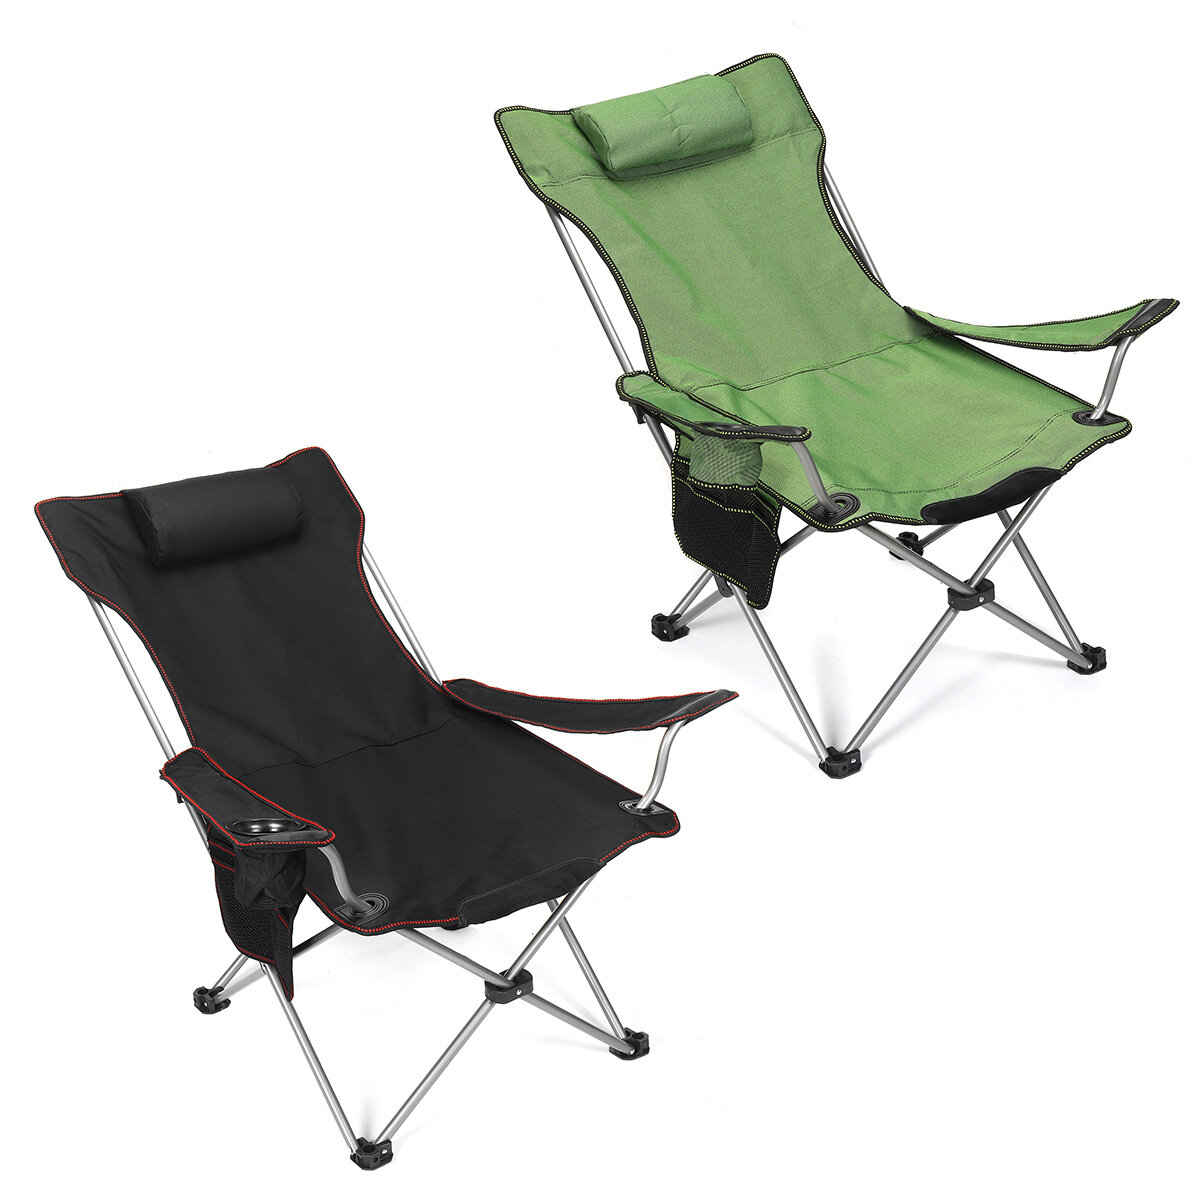 Camping Folding Chair Lightweight Portable Fishing Seat Picnic BBQ Beach Hiking Recliner Stool